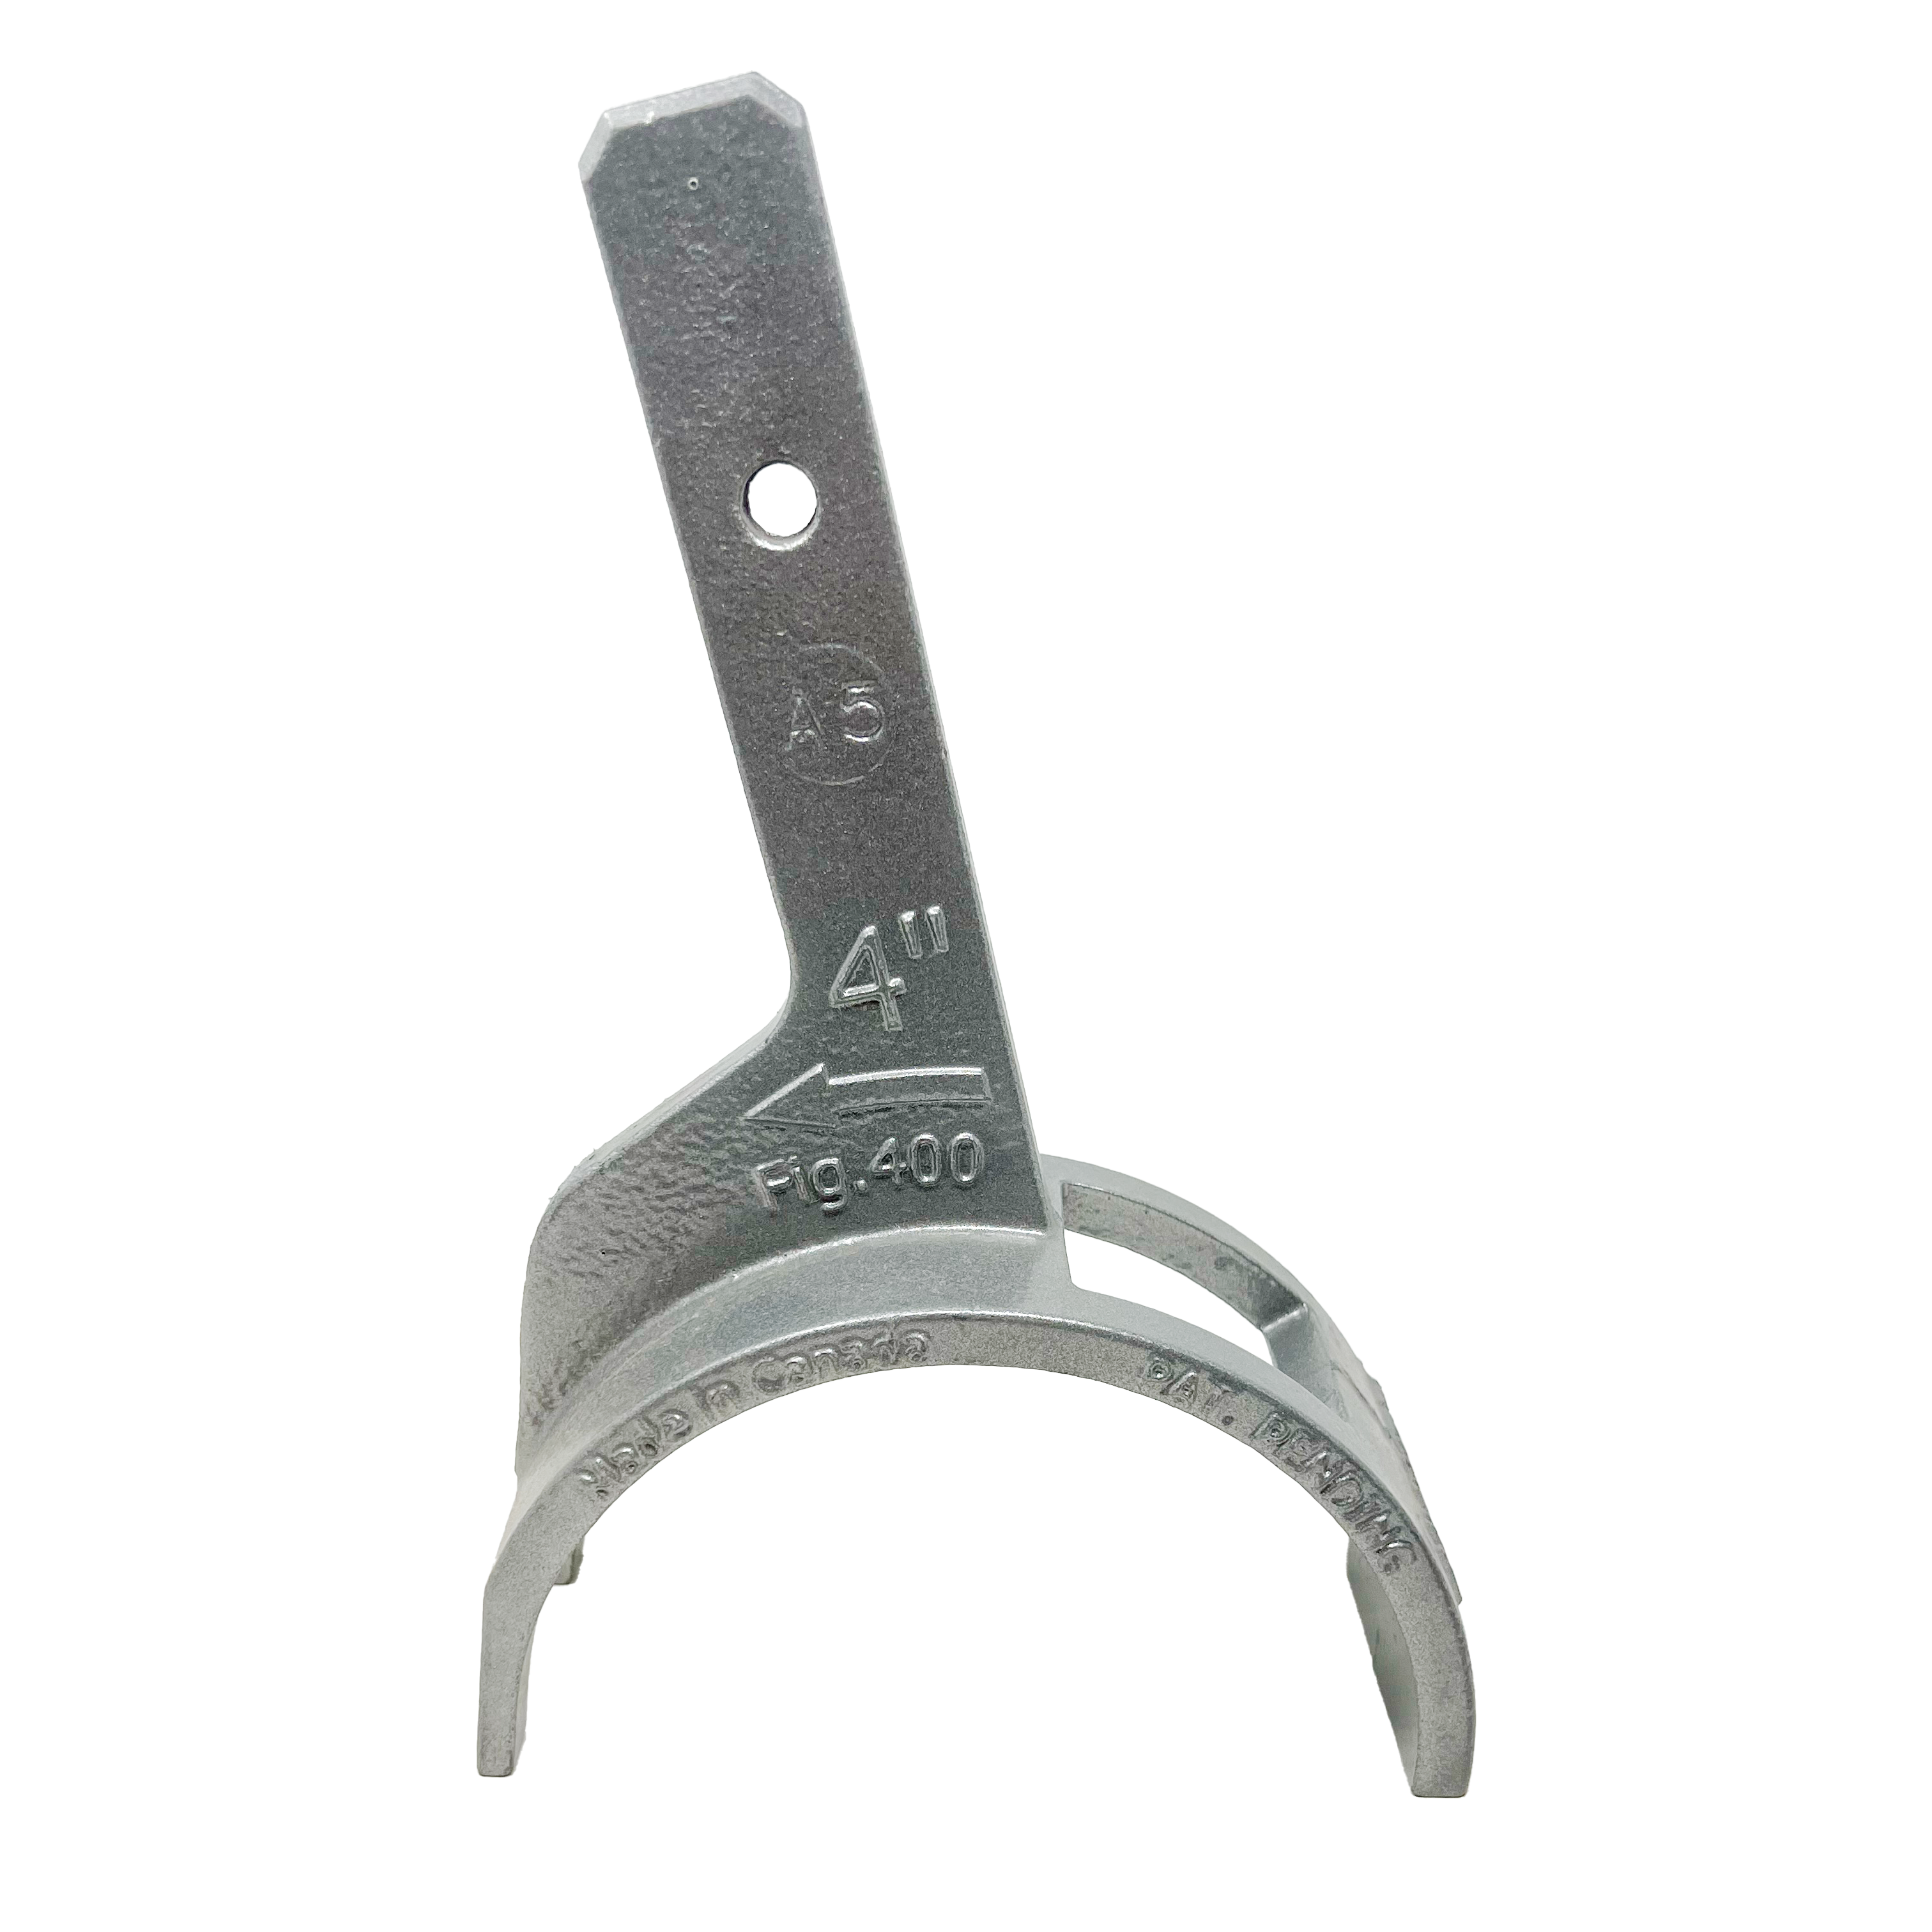 710-0049 HUWE Wrench Head for 4" Figure 100, Figure 200, Figure 206, Figure 400